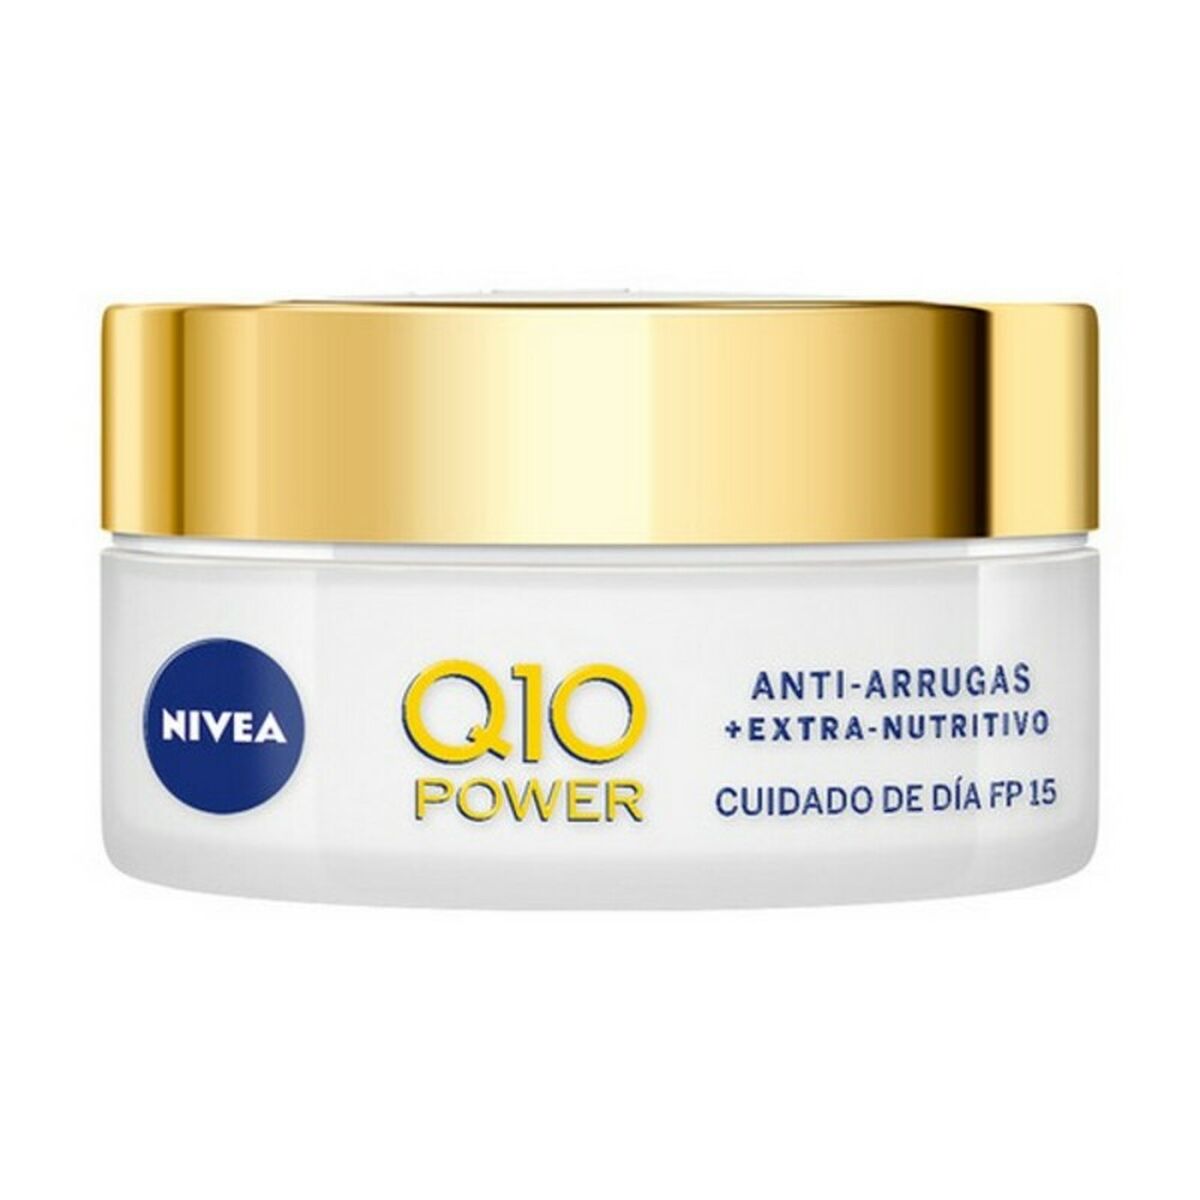 Anti-Wrinkle Cream Q10 Power Nivea 1017-64259 (50 ml) Spf 15 50 ml-0